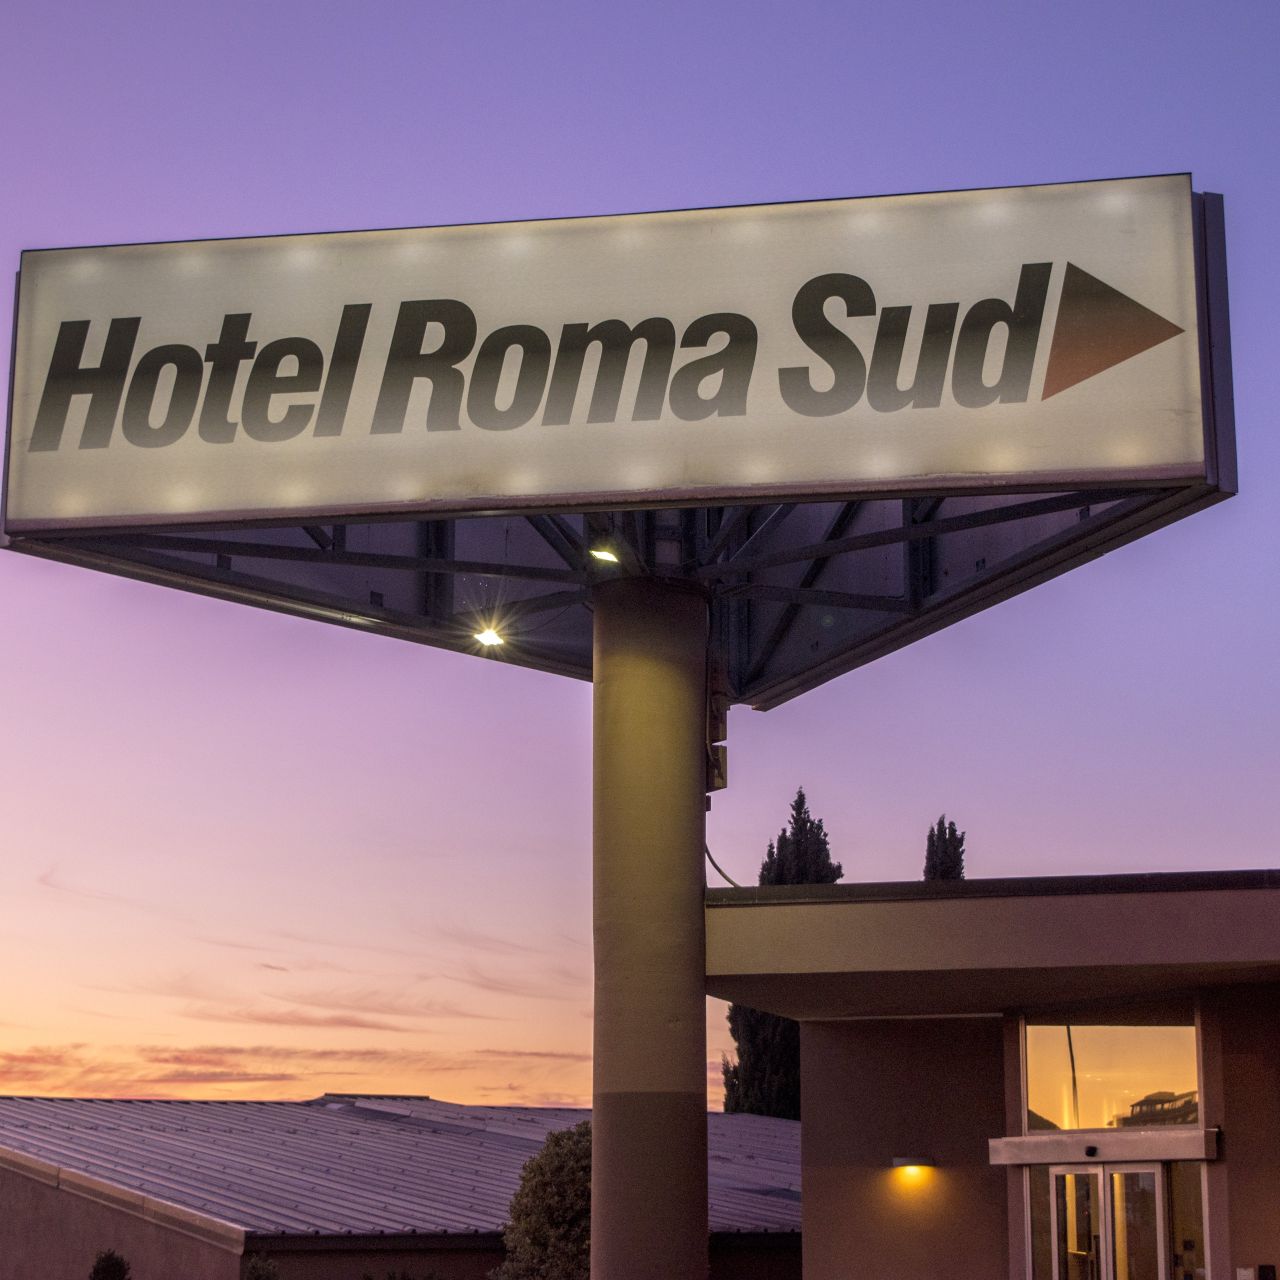 Hotel Roma Sud - Frascati - HOTEL INFO